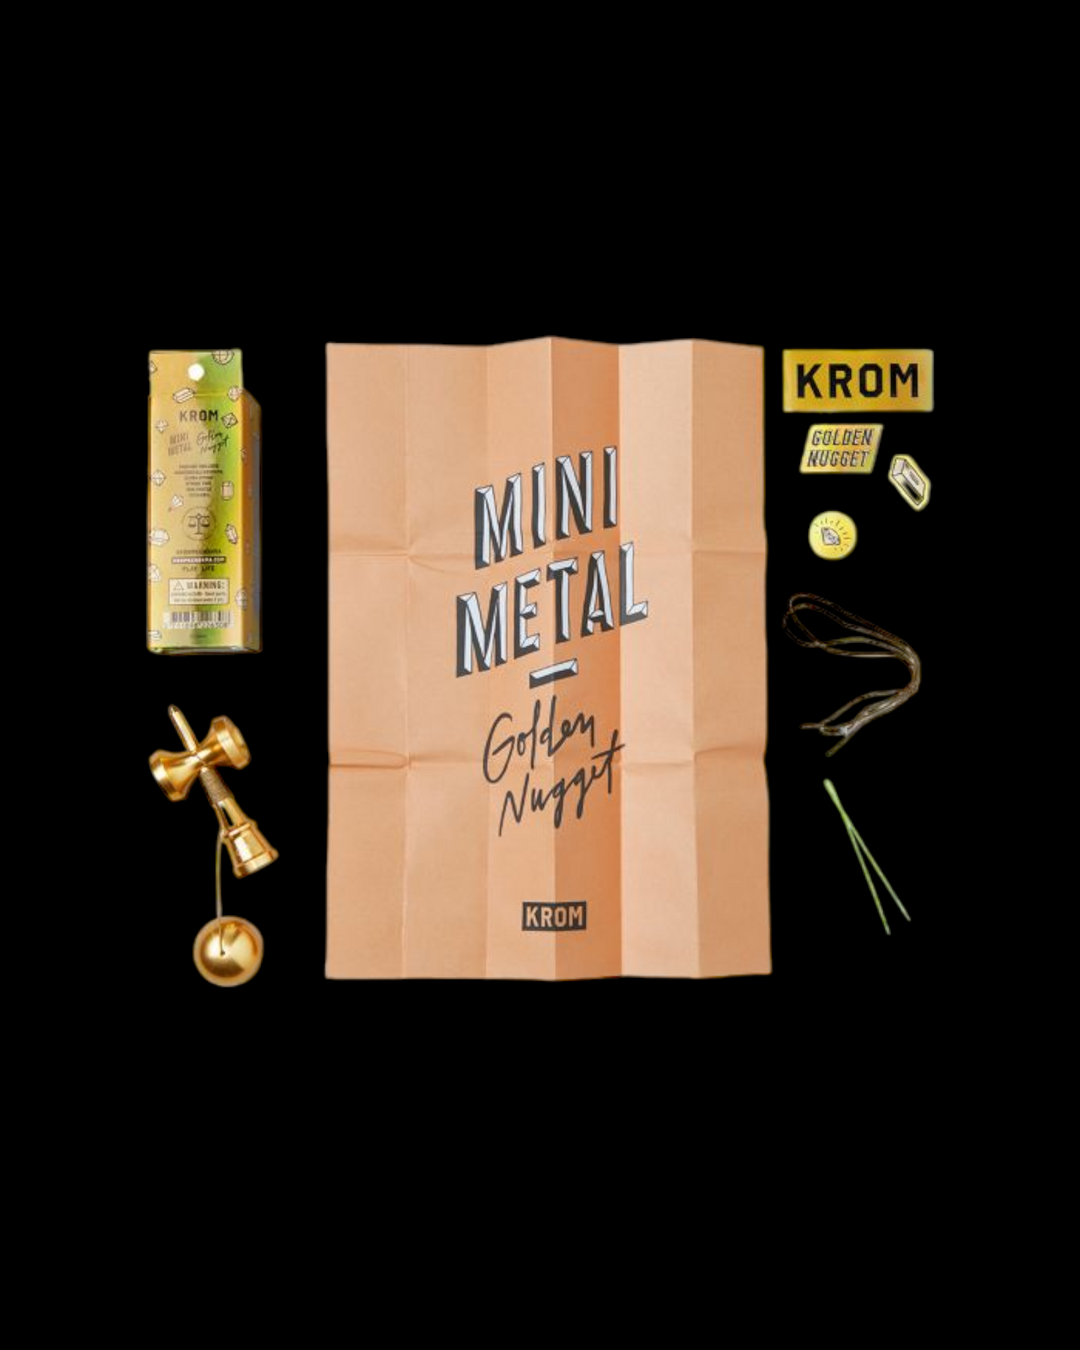 Mini Metal - Golden Nugget Kendama KROM Kendama   